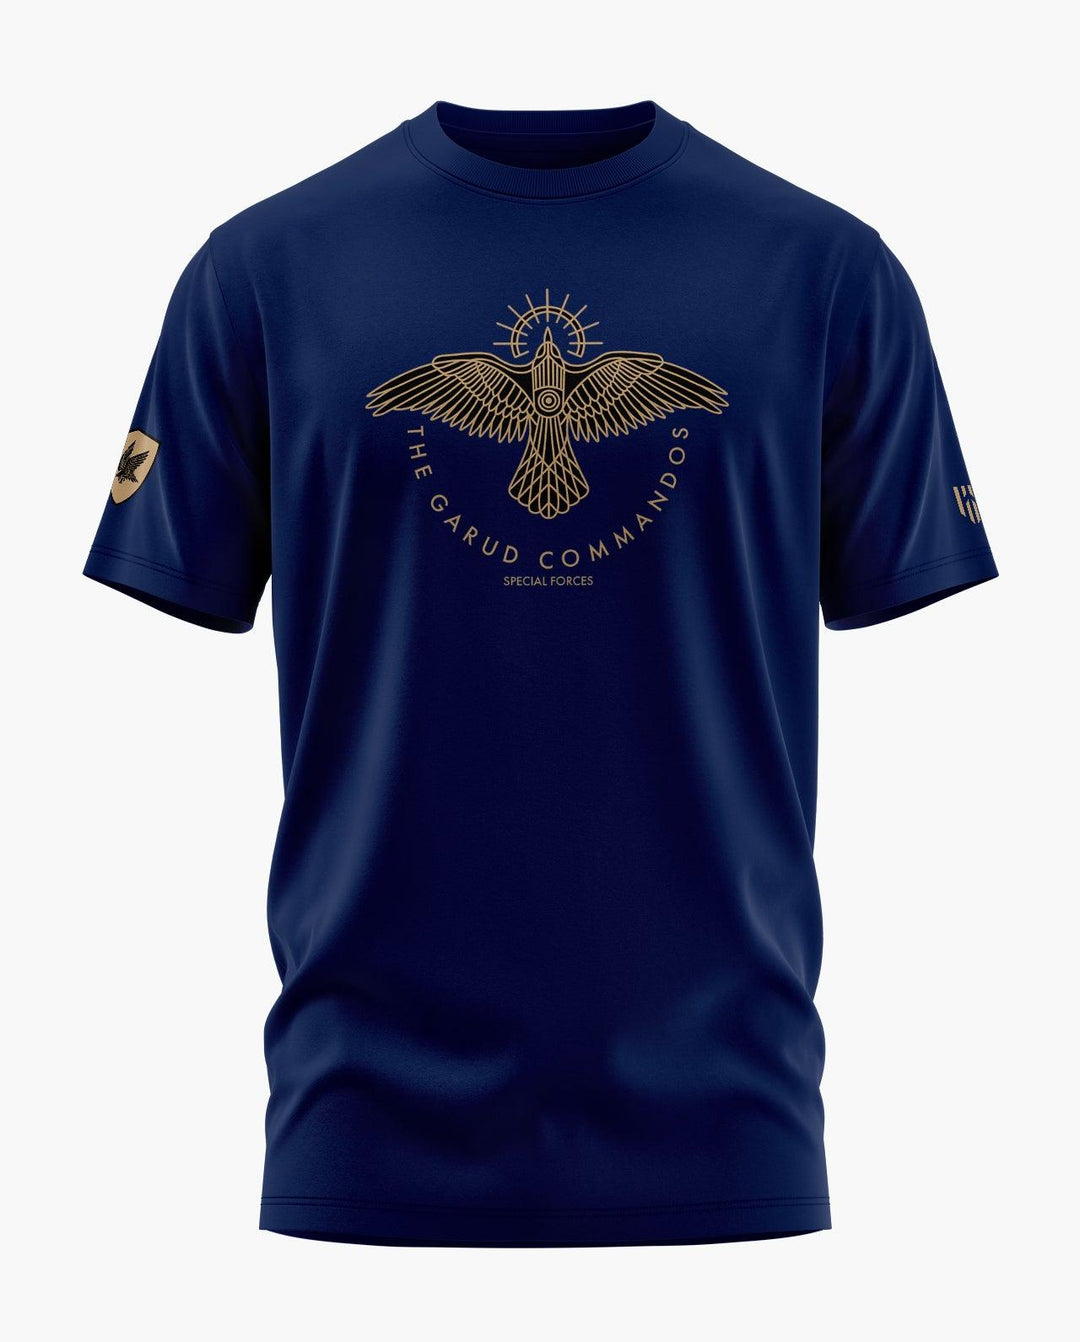 Garud Commando SF T-Shirt - Aero Armour